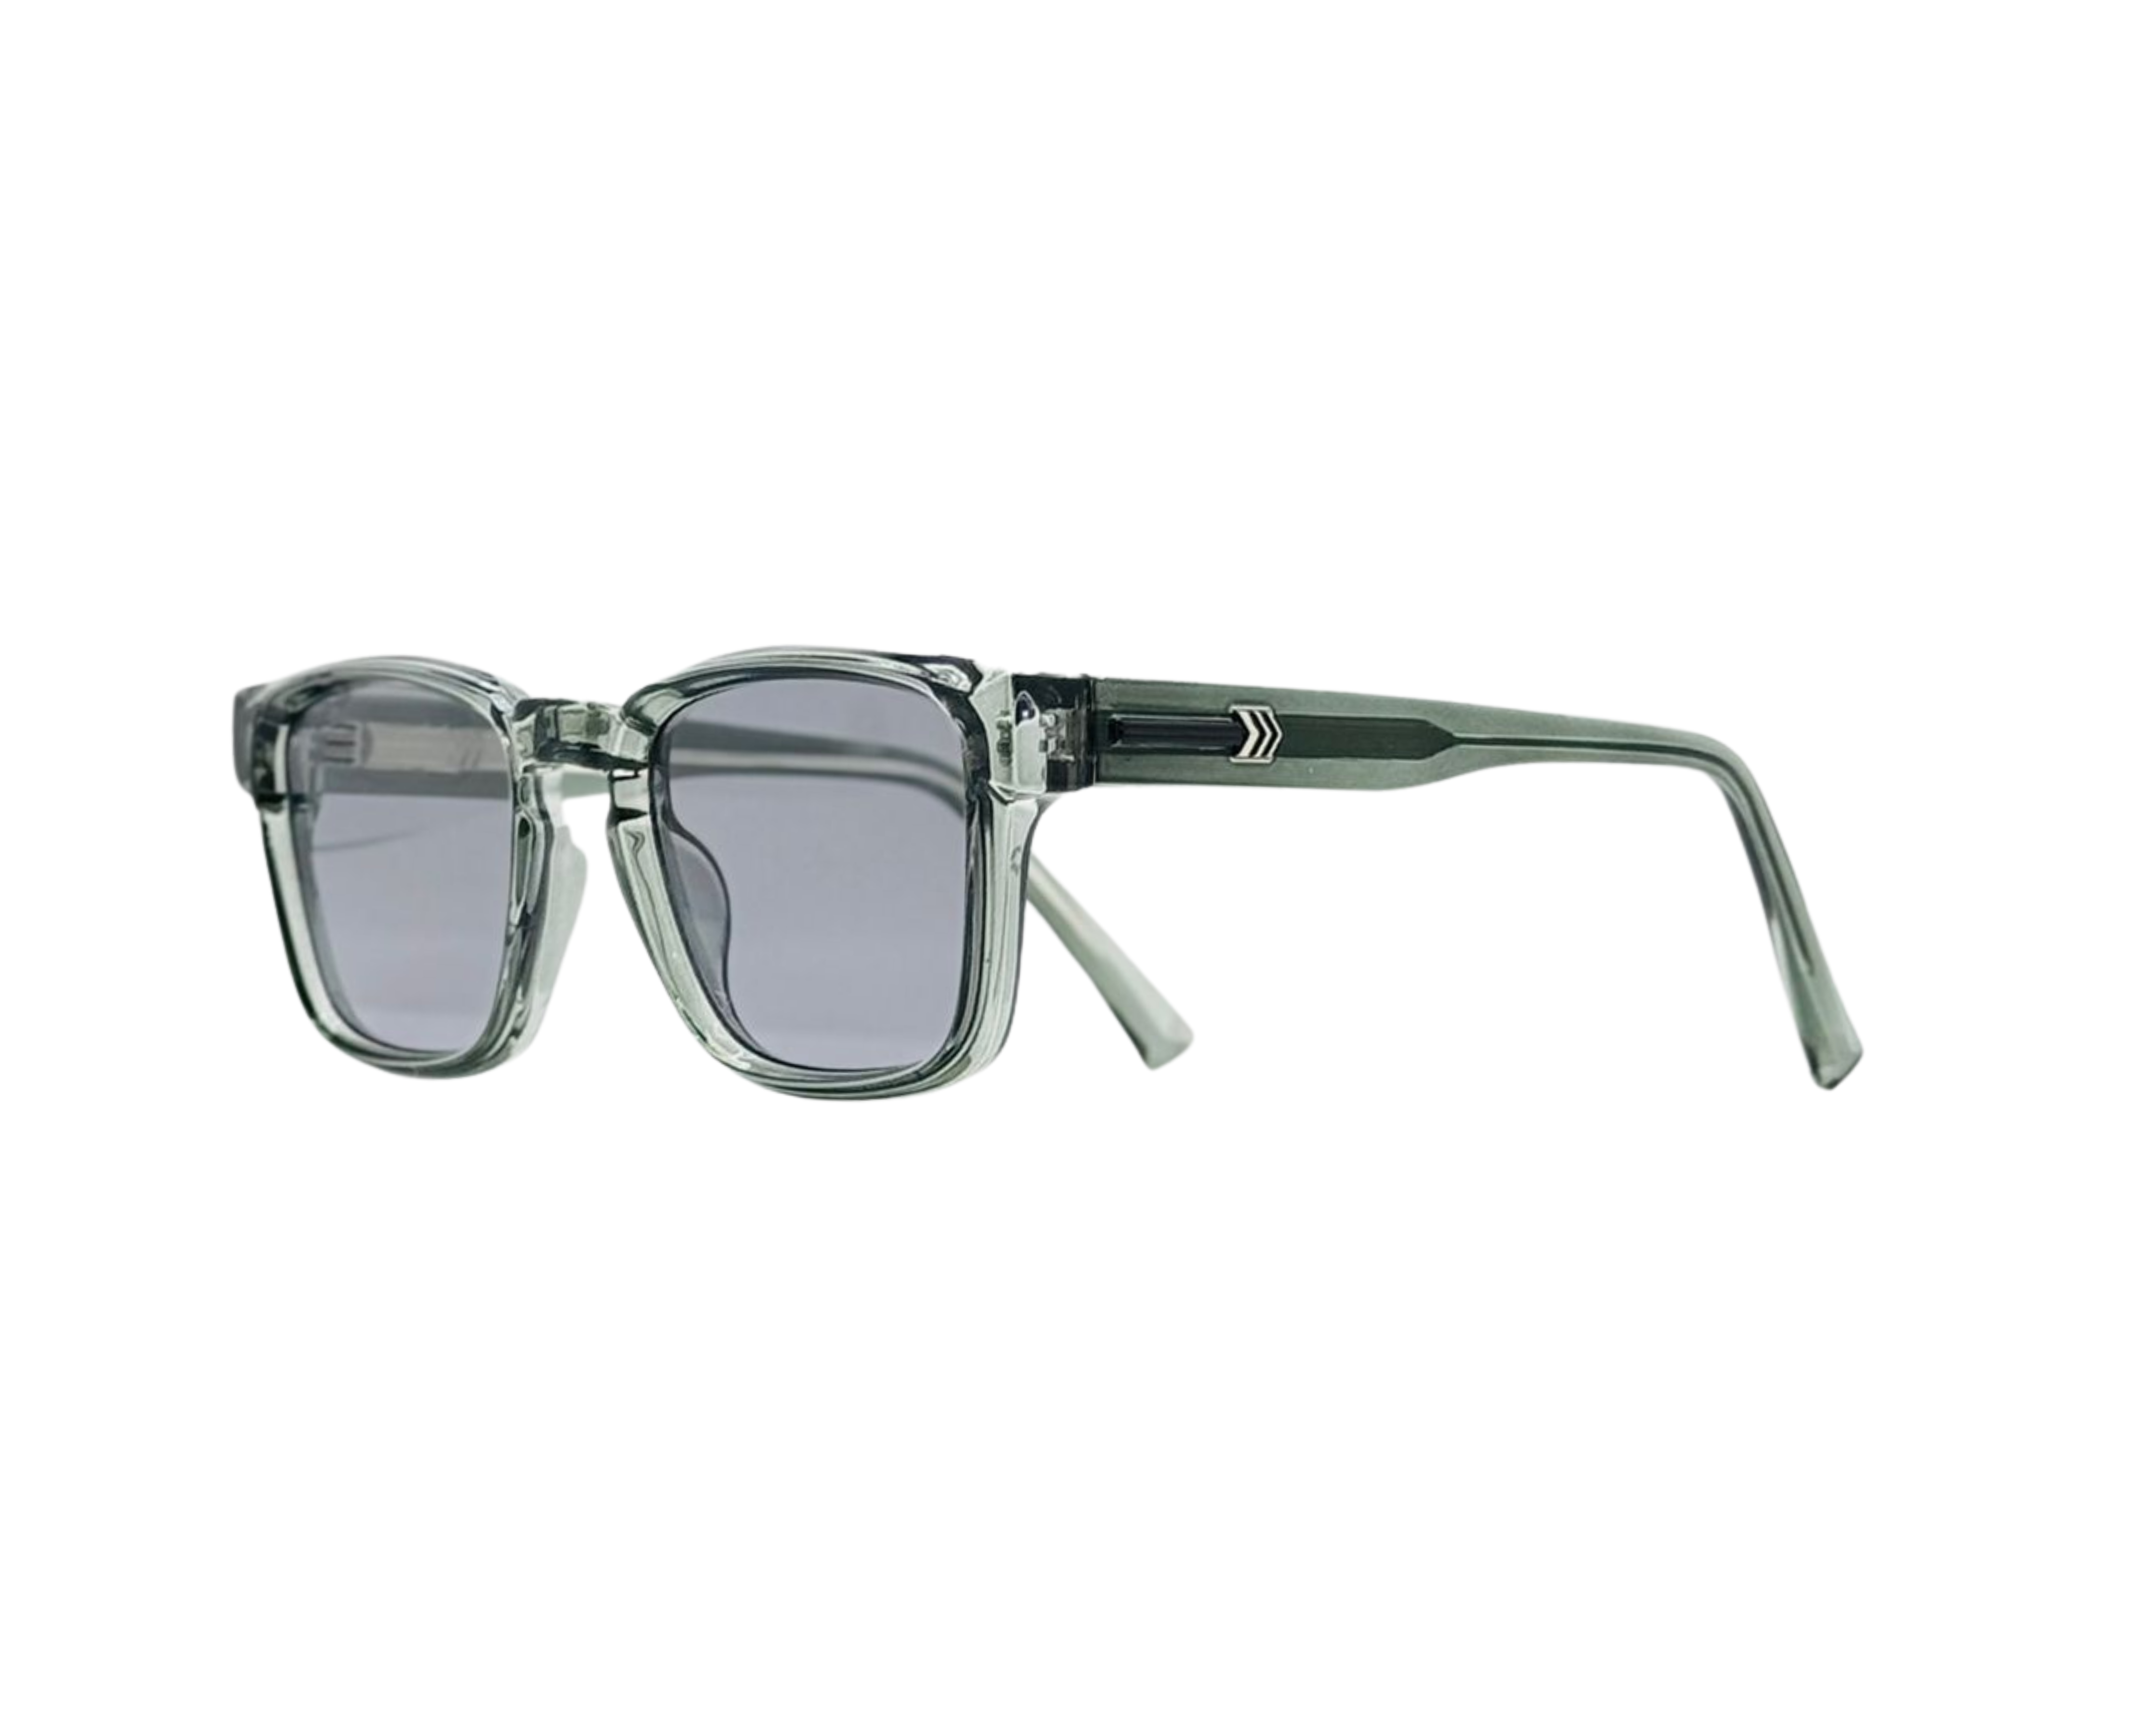 NS Luxury - 9829 - Grey - Sunglasses